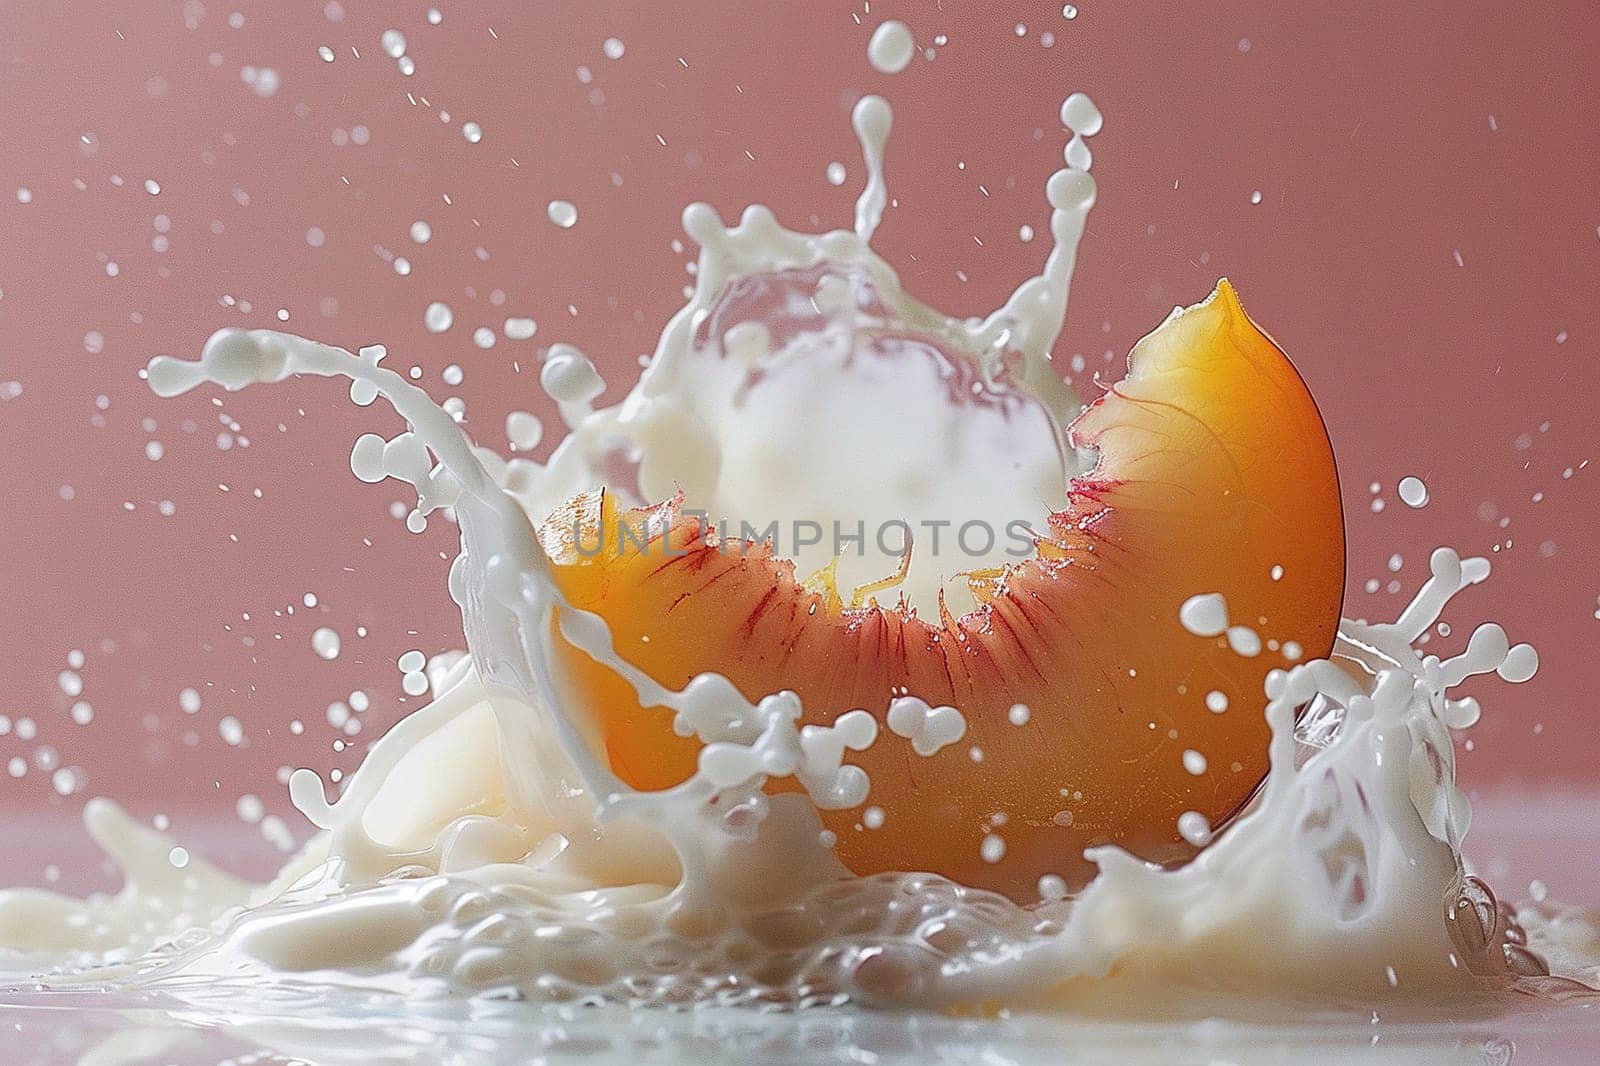 A slice of peach in a splash of milk on a pink background. Peach yogurt or milkshake.